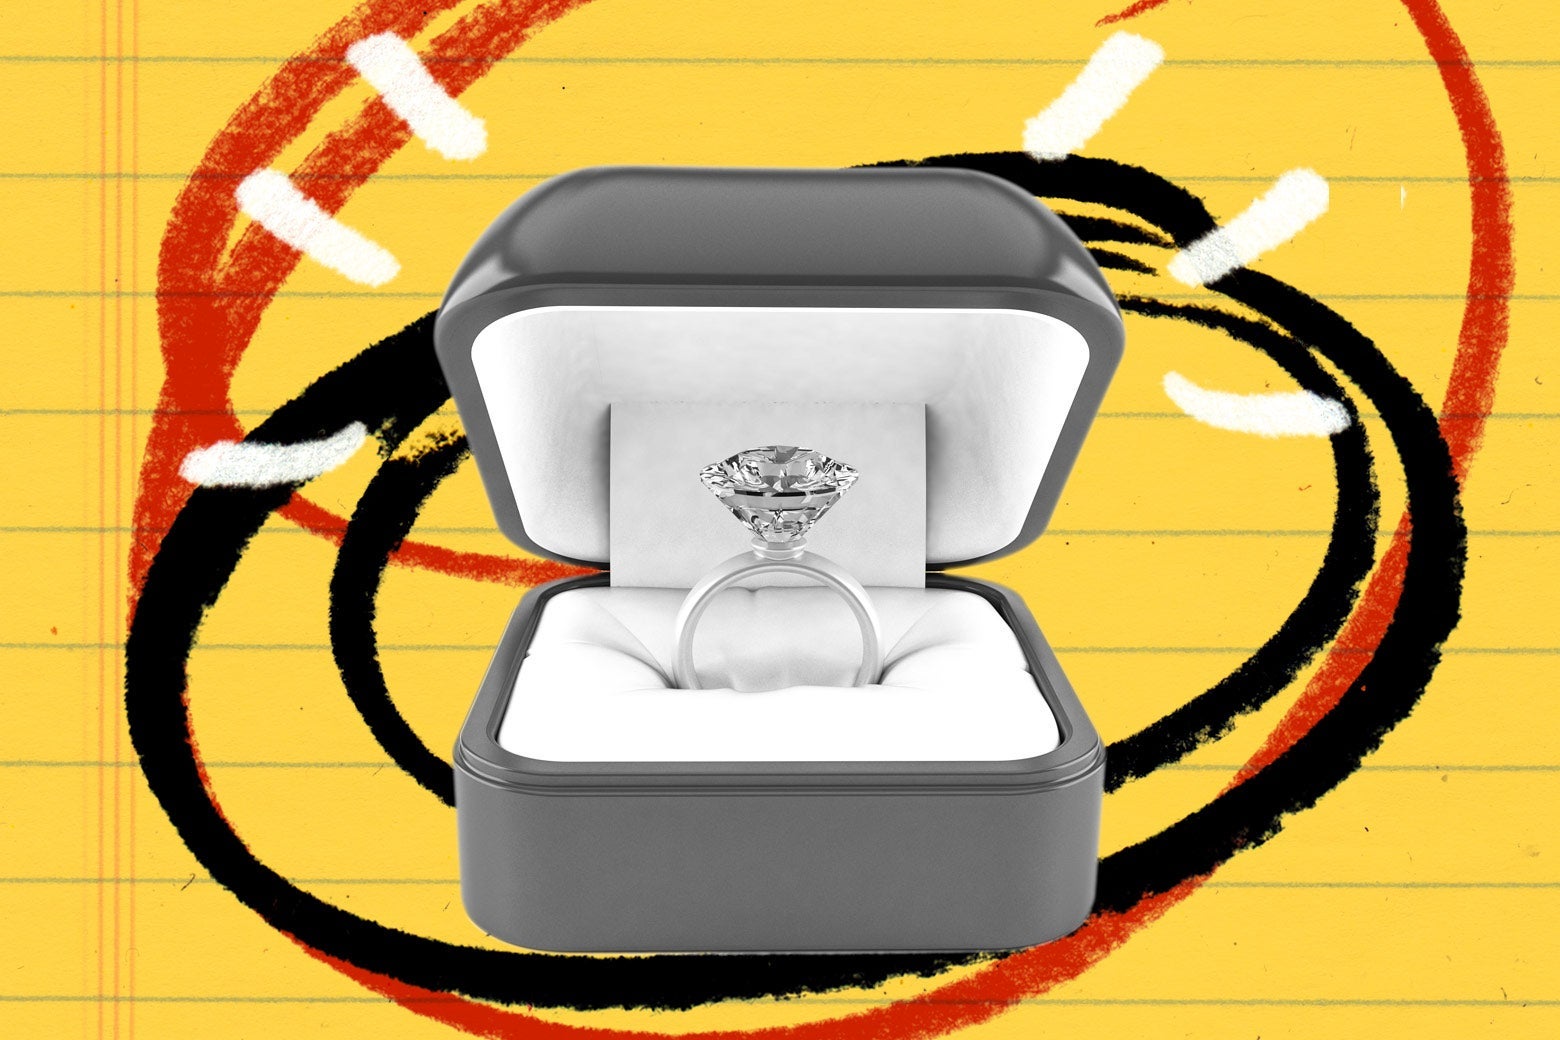 A diamond ring in a box.